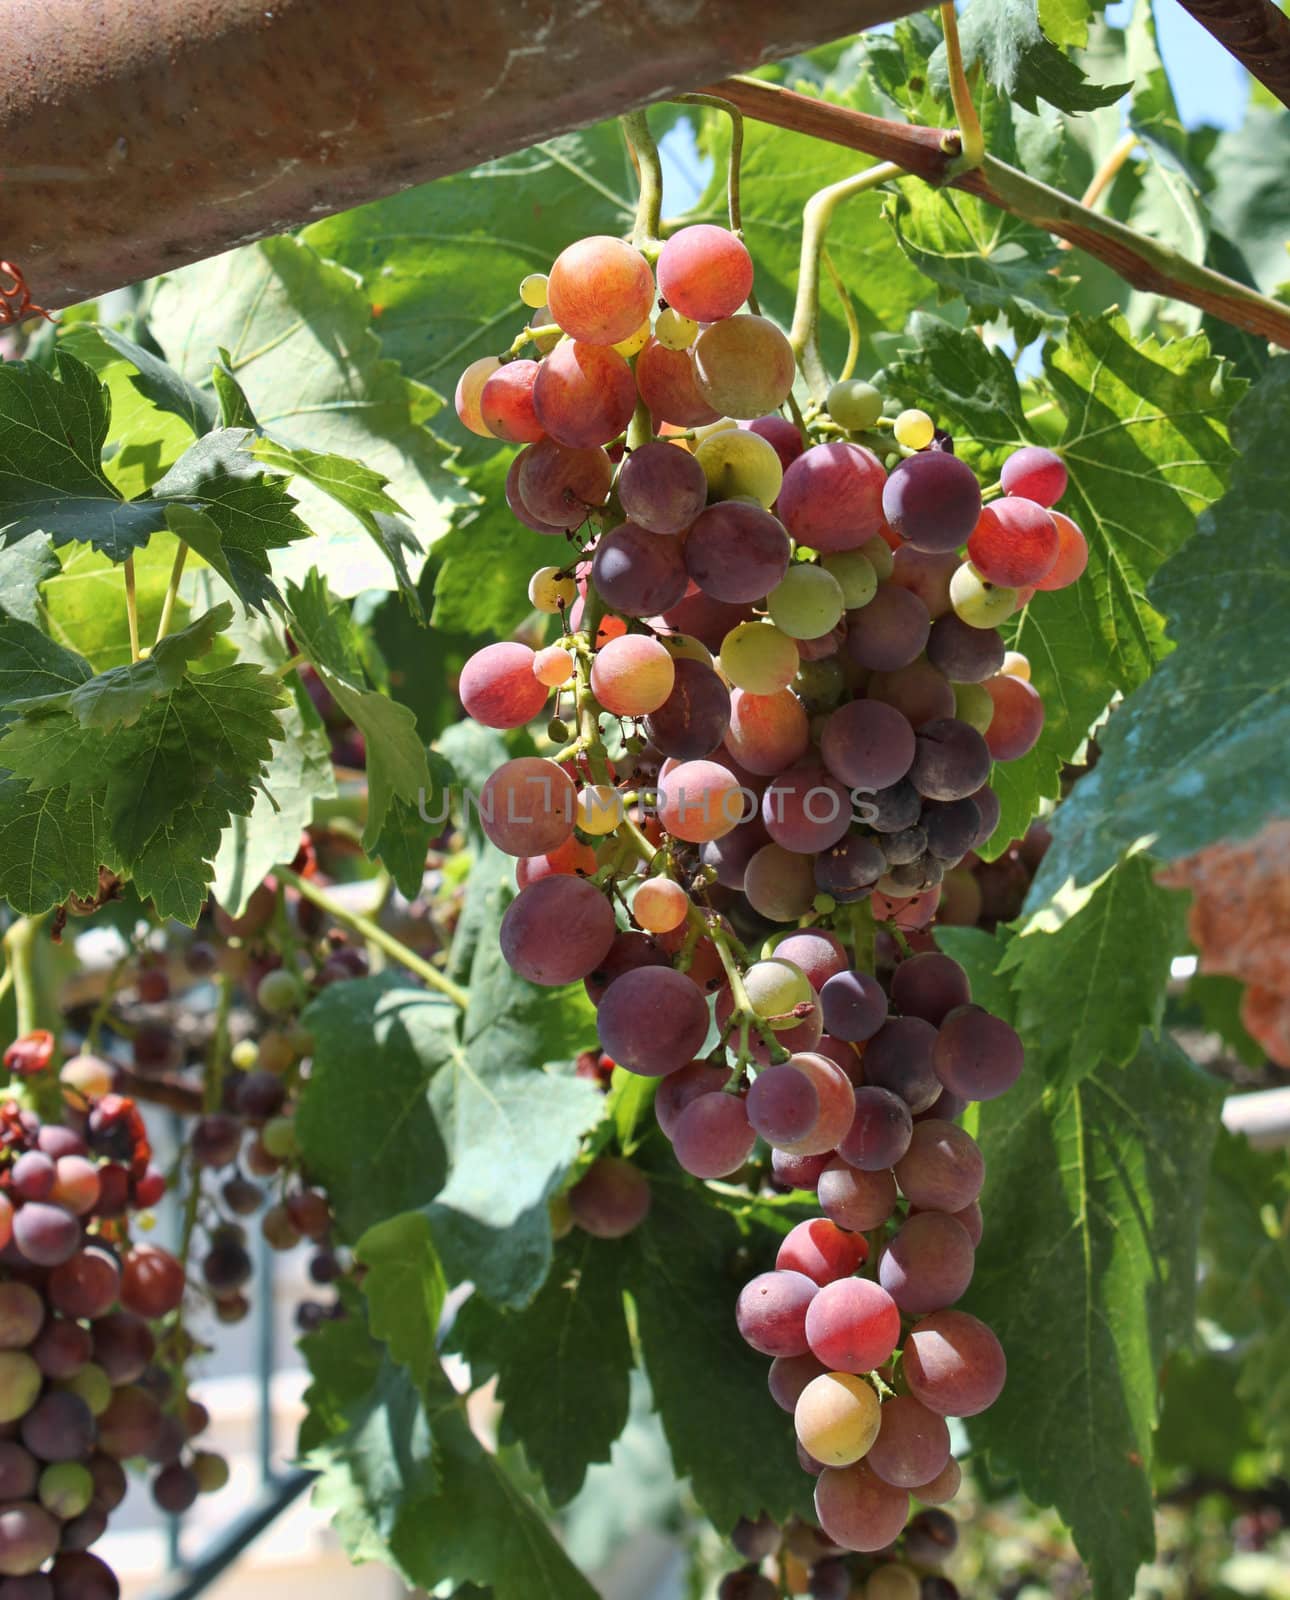 Fresh wine grapes growing in vineyard garden